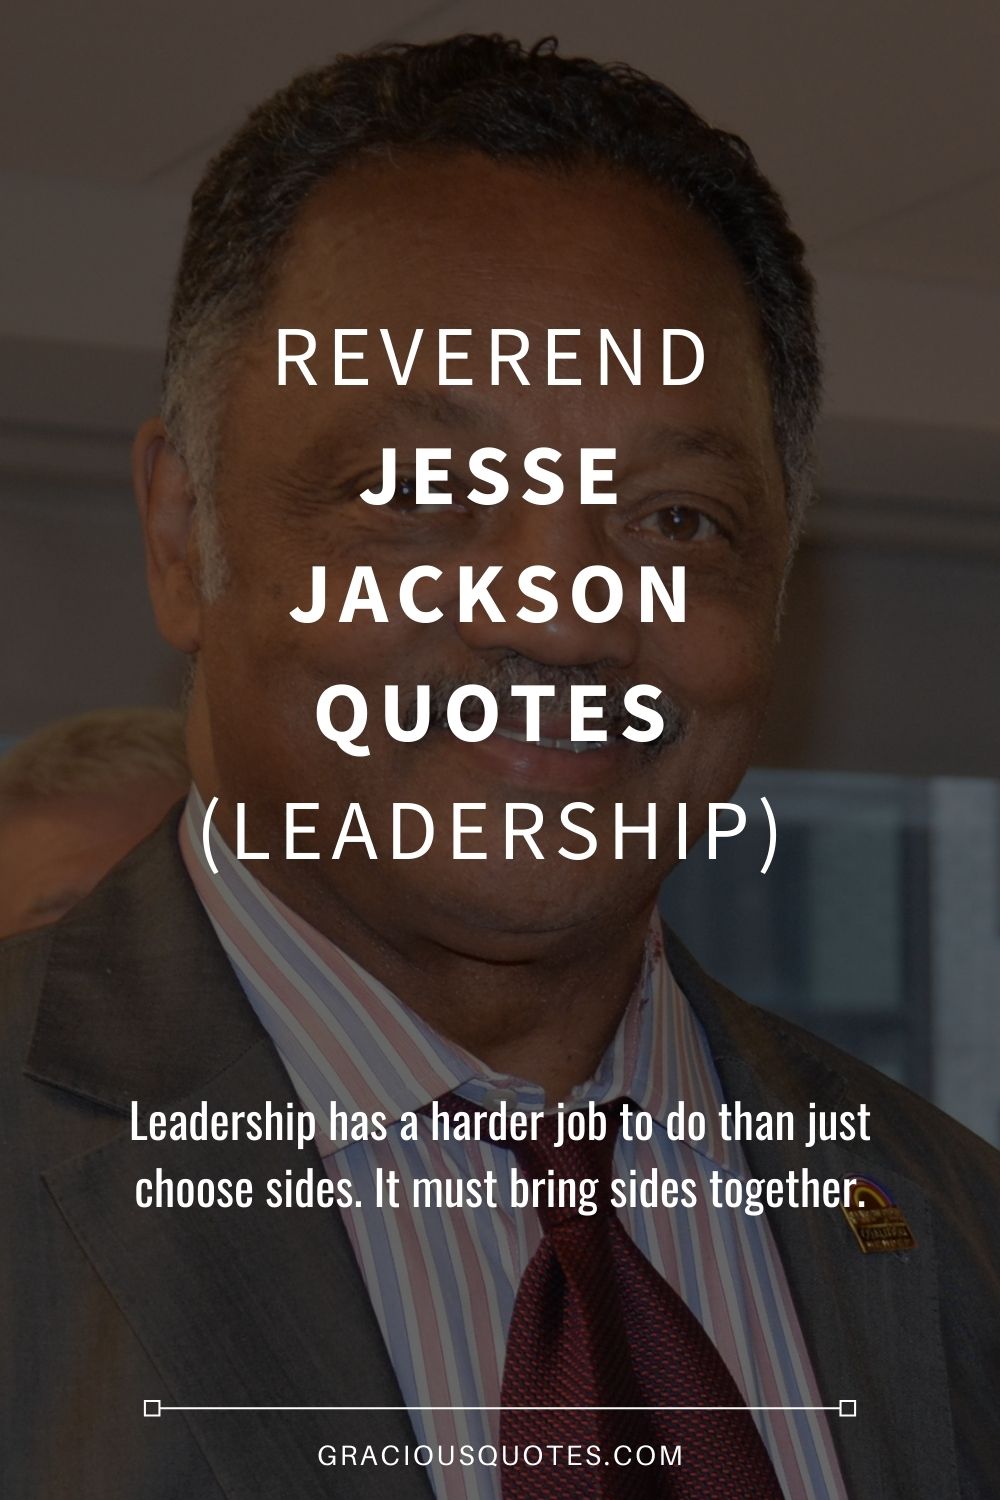 Reverend Jesse Jackson Quotes (LEADERSHIP) - Gracious Quotes